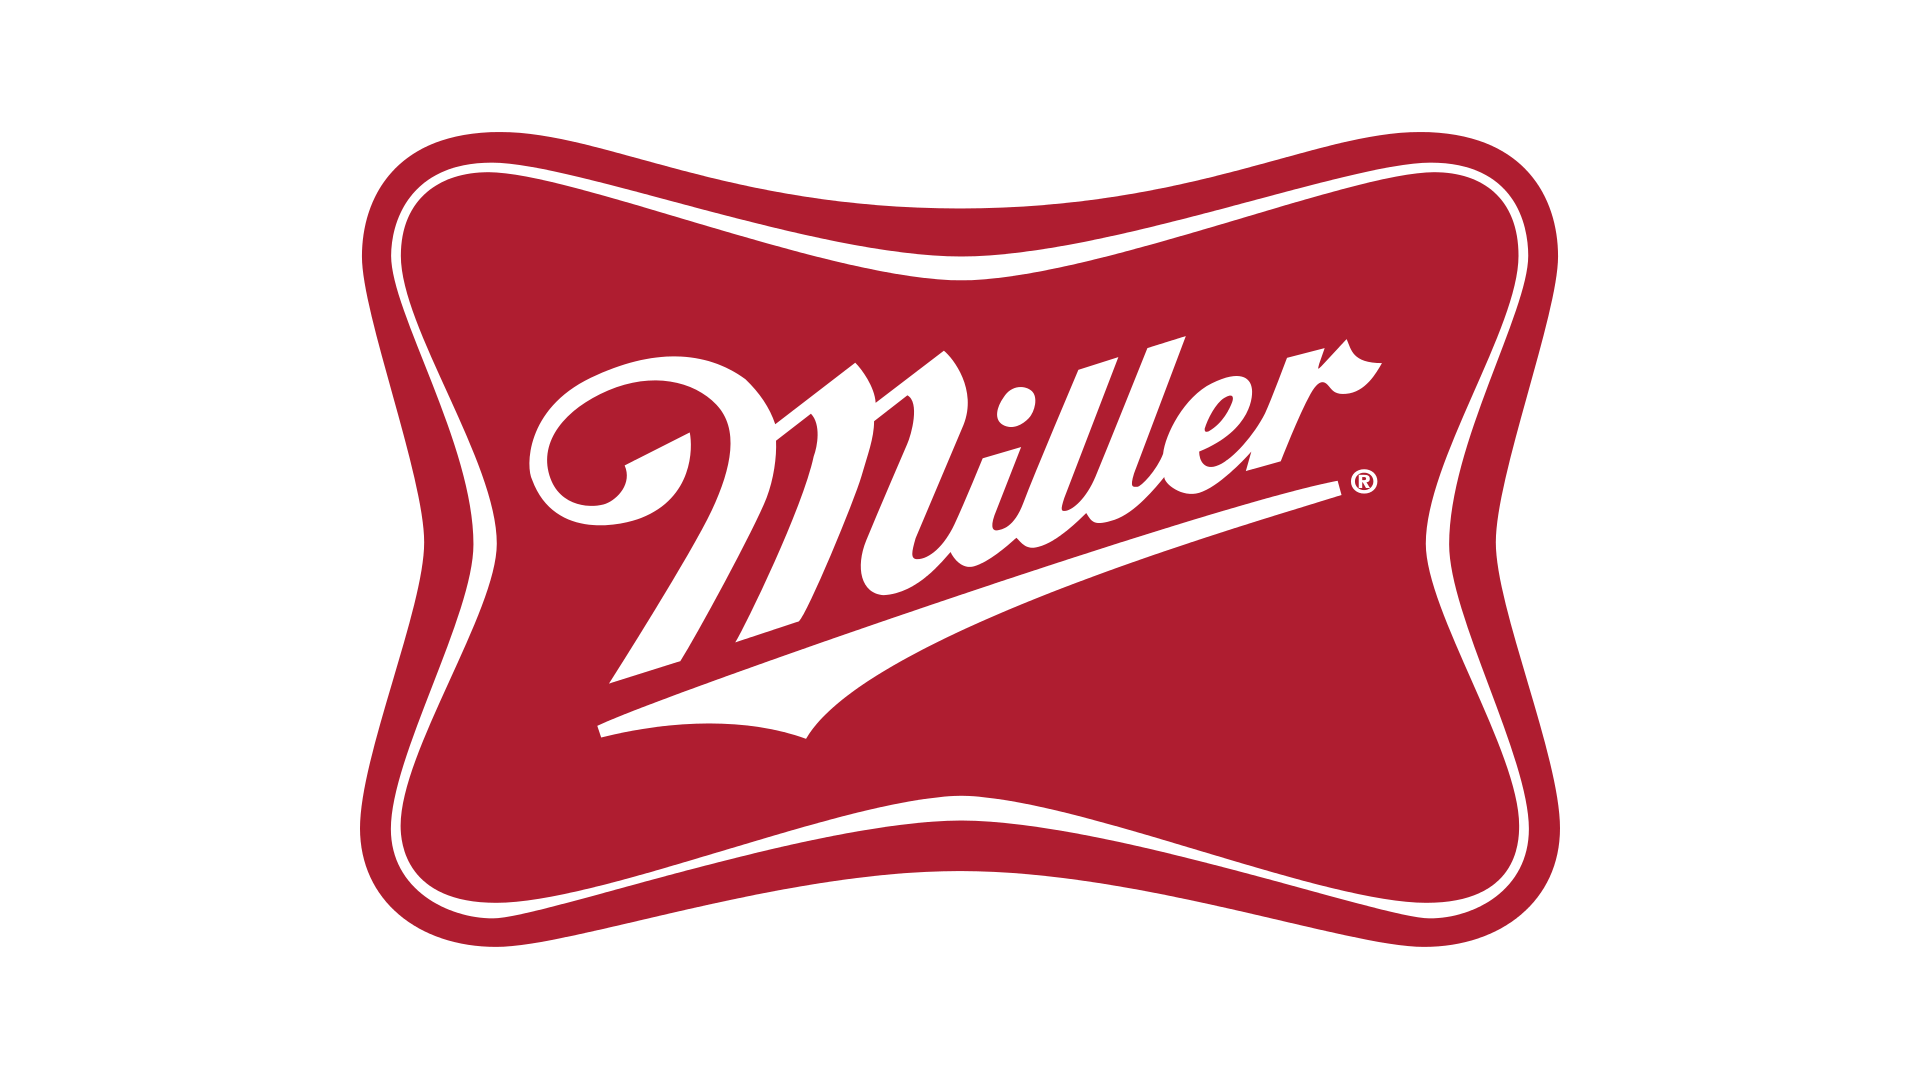 American Beer Logo - Miller Beer logo, symbol, meaning, History and Evolution